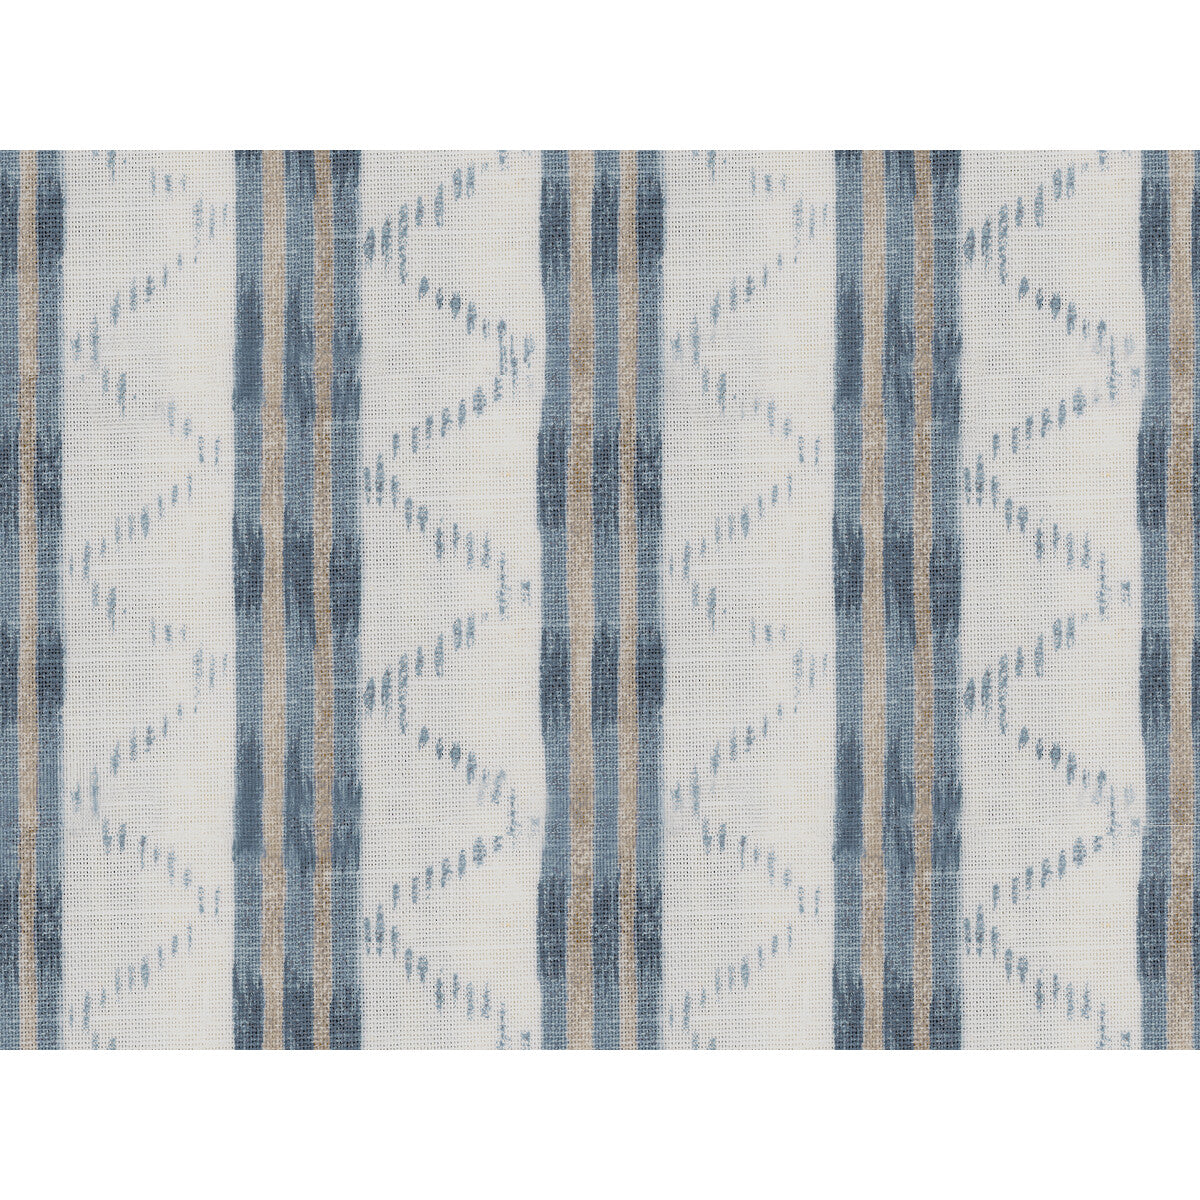 Makassar fabric in blue color - pattern 2017106.5.0 - by Lee Jofa in the Oscar De La Renta III collection